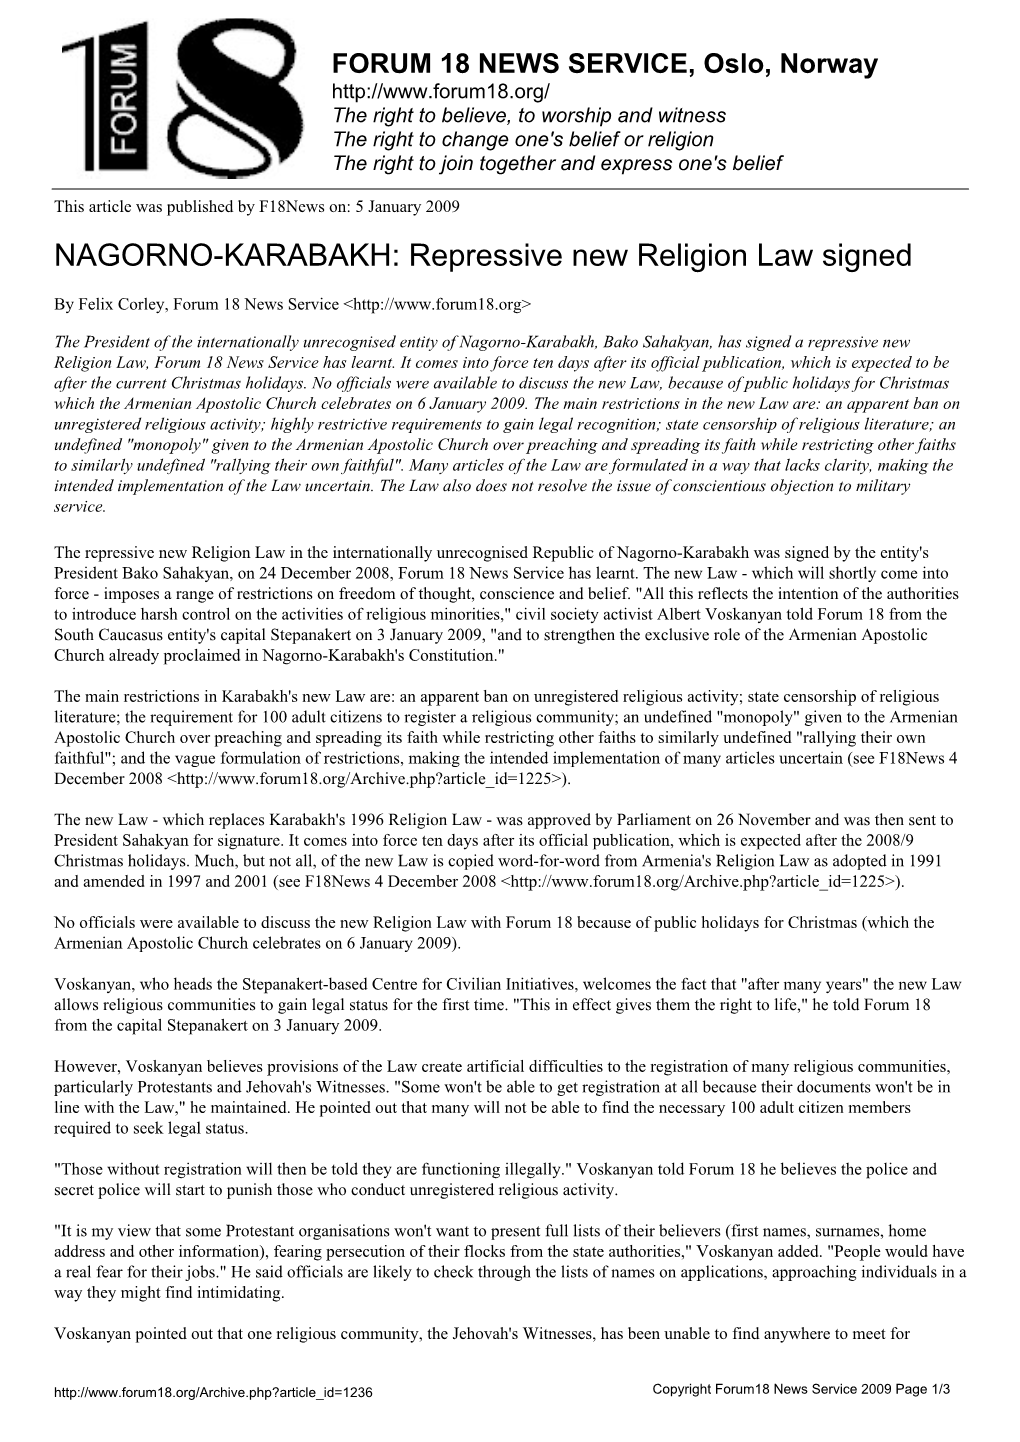 NAGORNO-KARABAKH: Repressive New Religion Law Signed